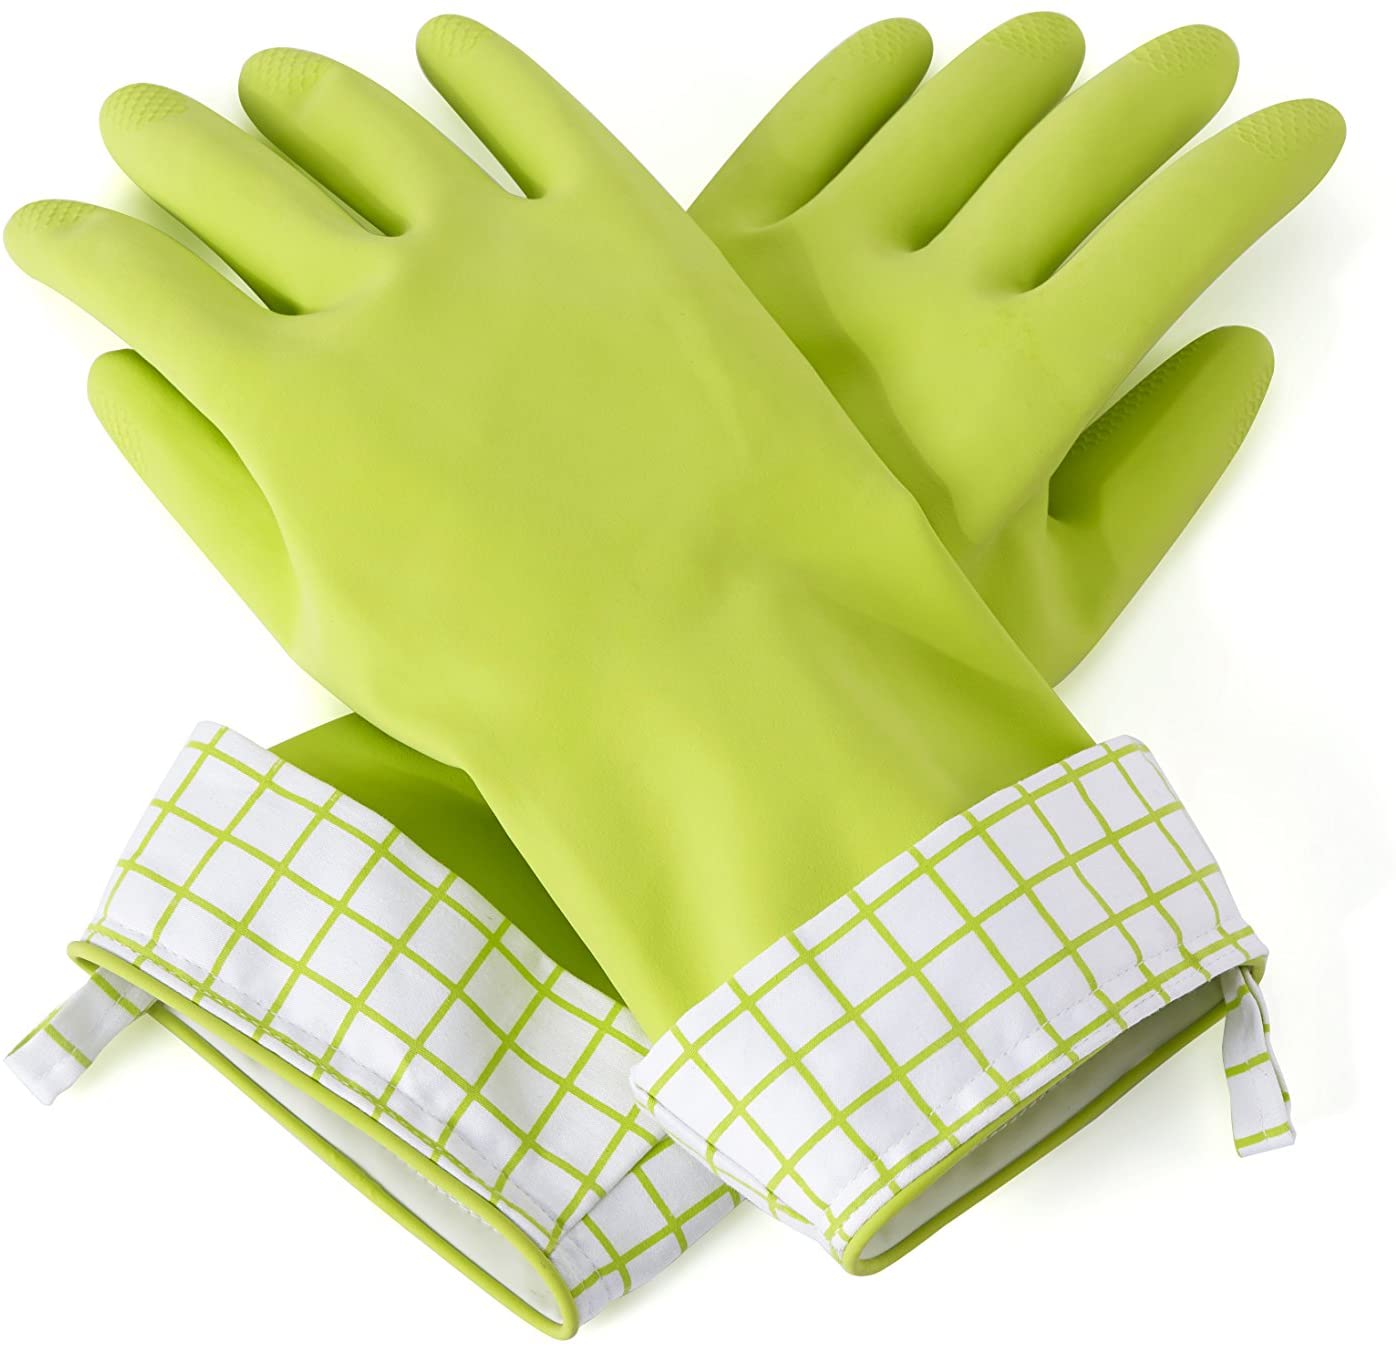 Buy green Splash Patrol Natral Latex Cleaning Gloves